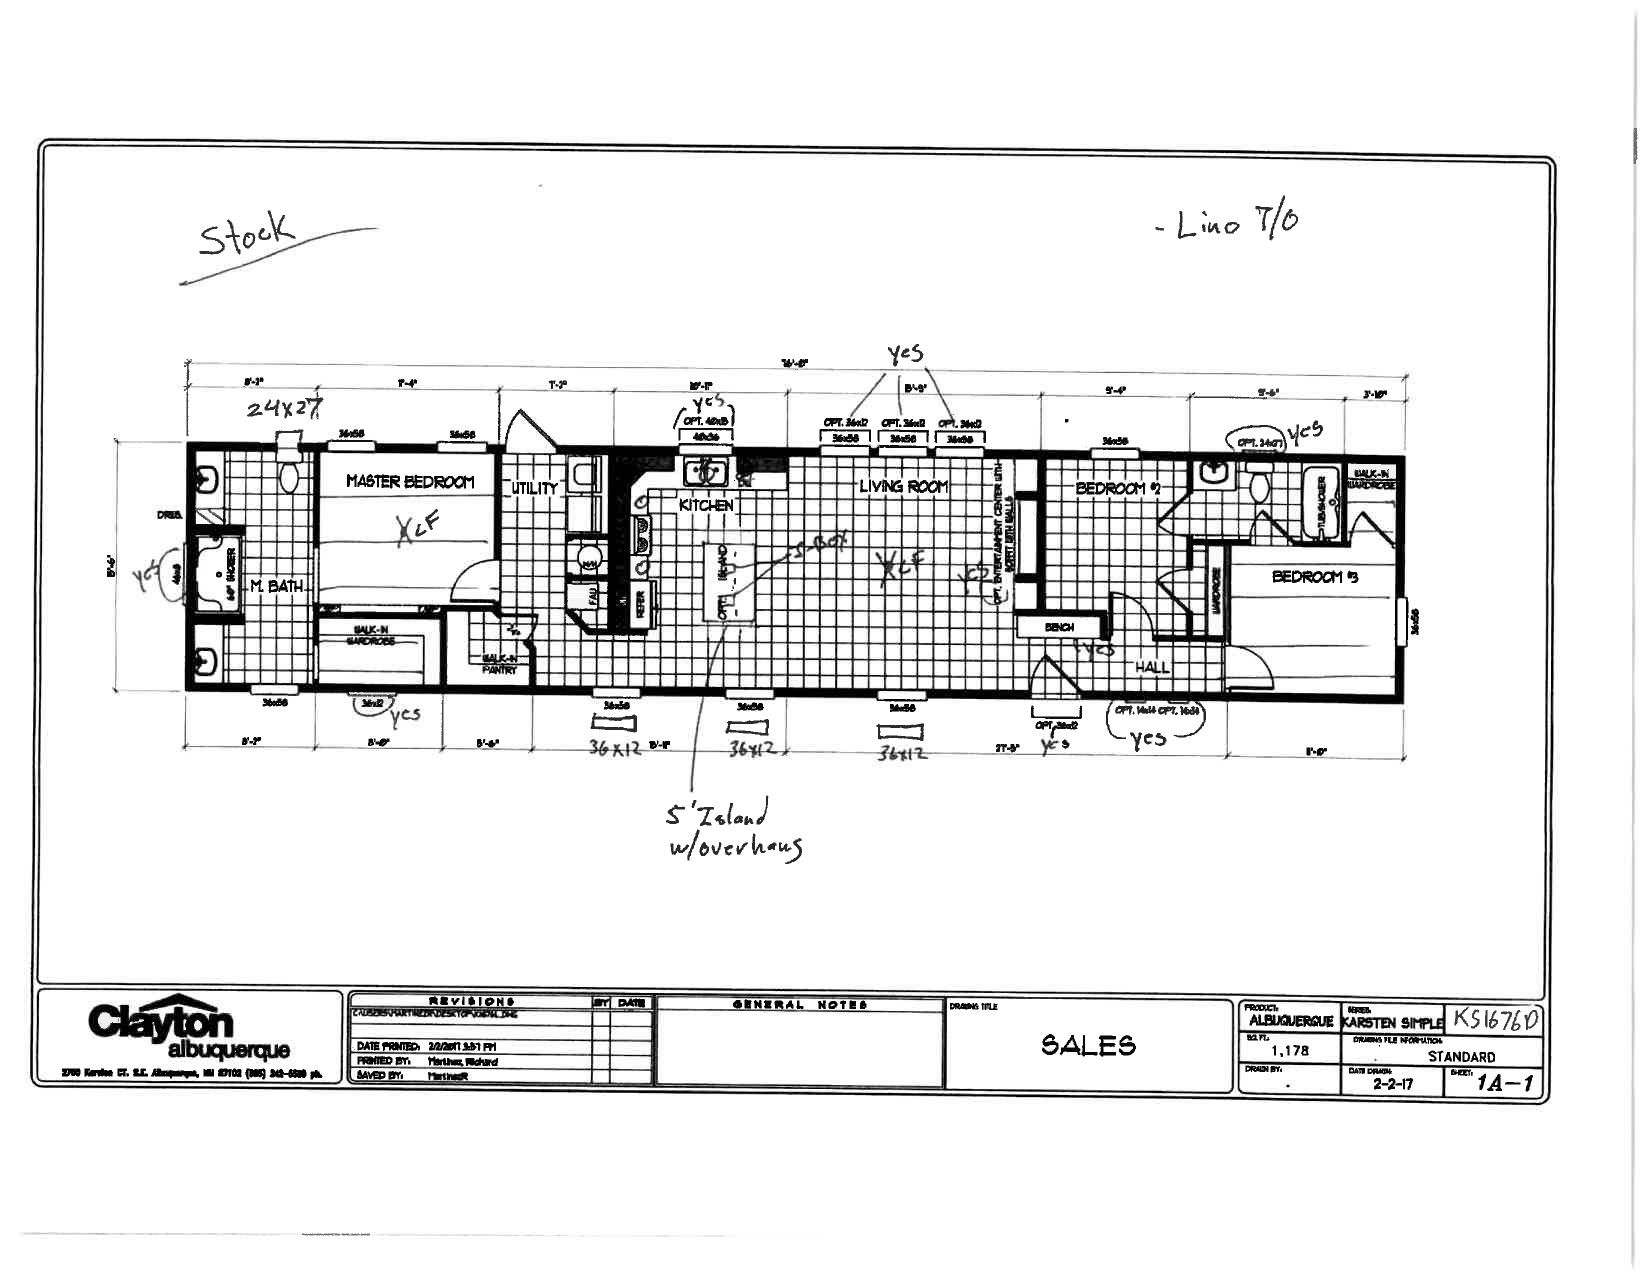 Homes Direct Modular Homes - Model K1676D - Floorplan